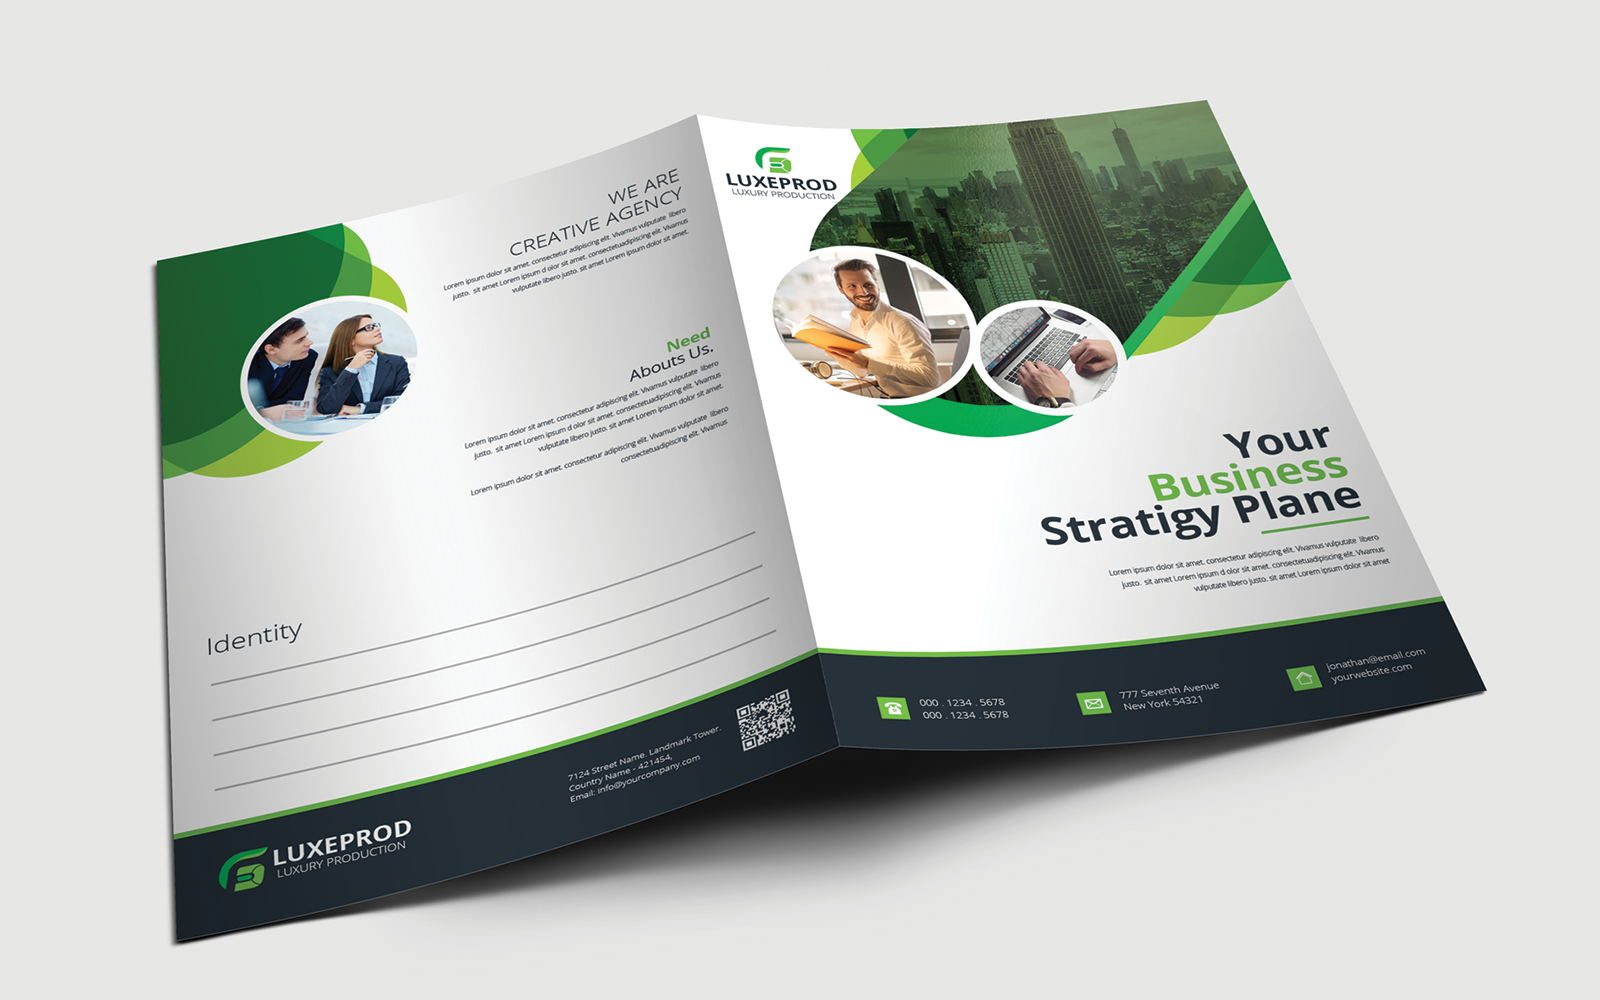 Green Color presentation folder - Corporate Identity Template